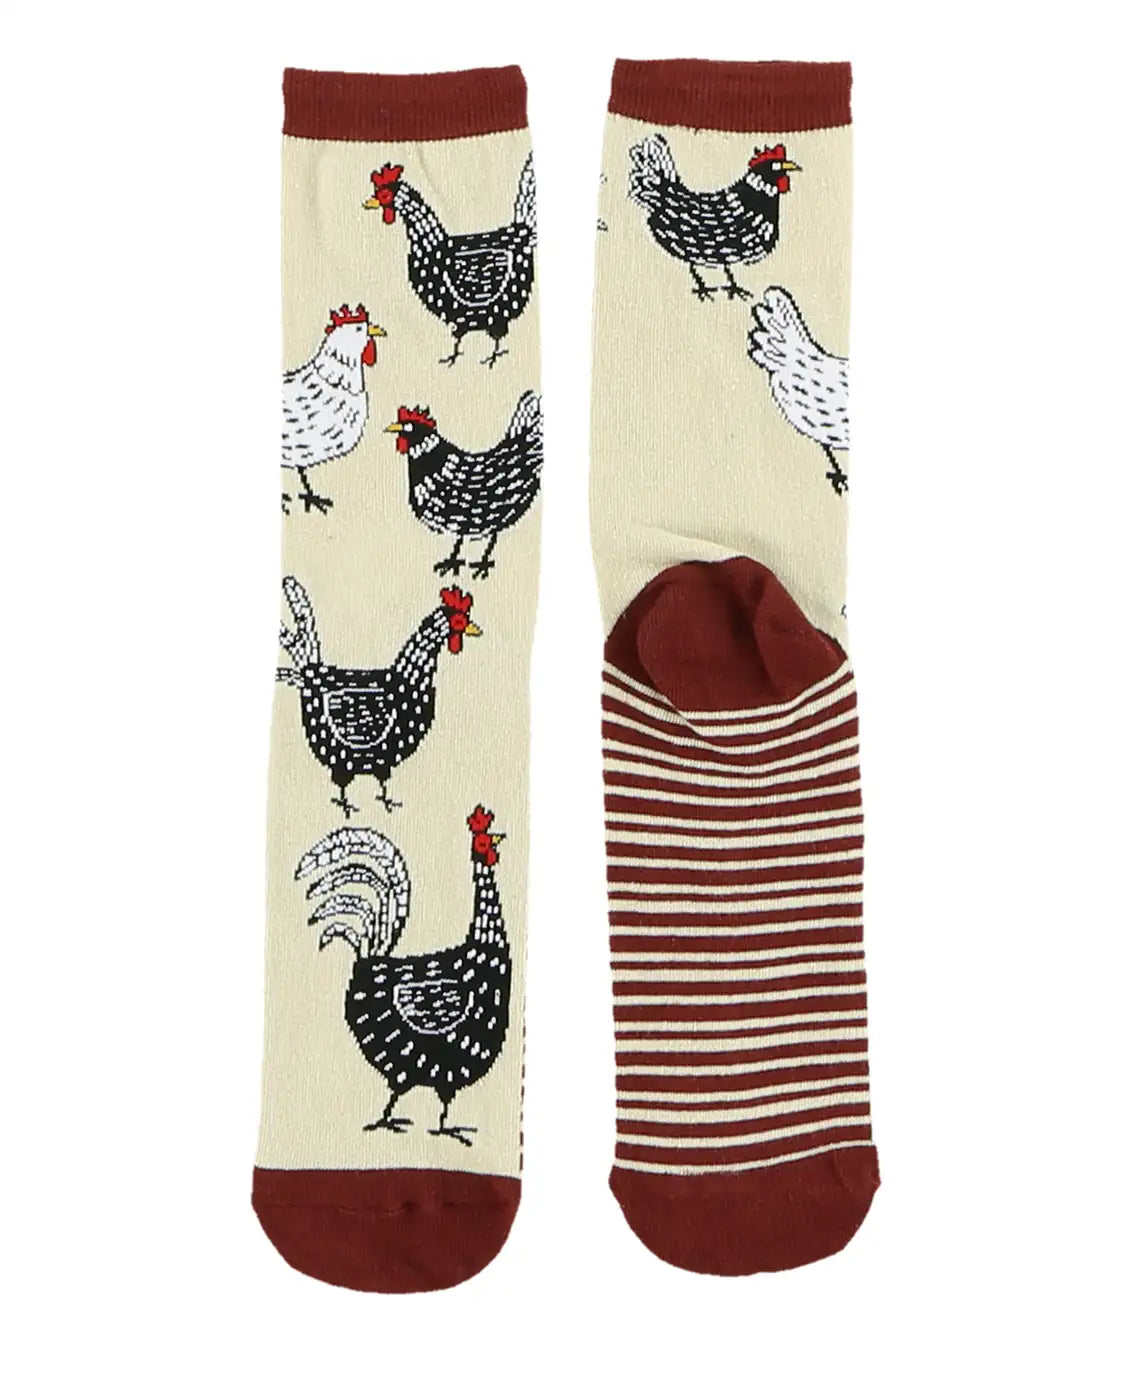 Chicken Crew Socks